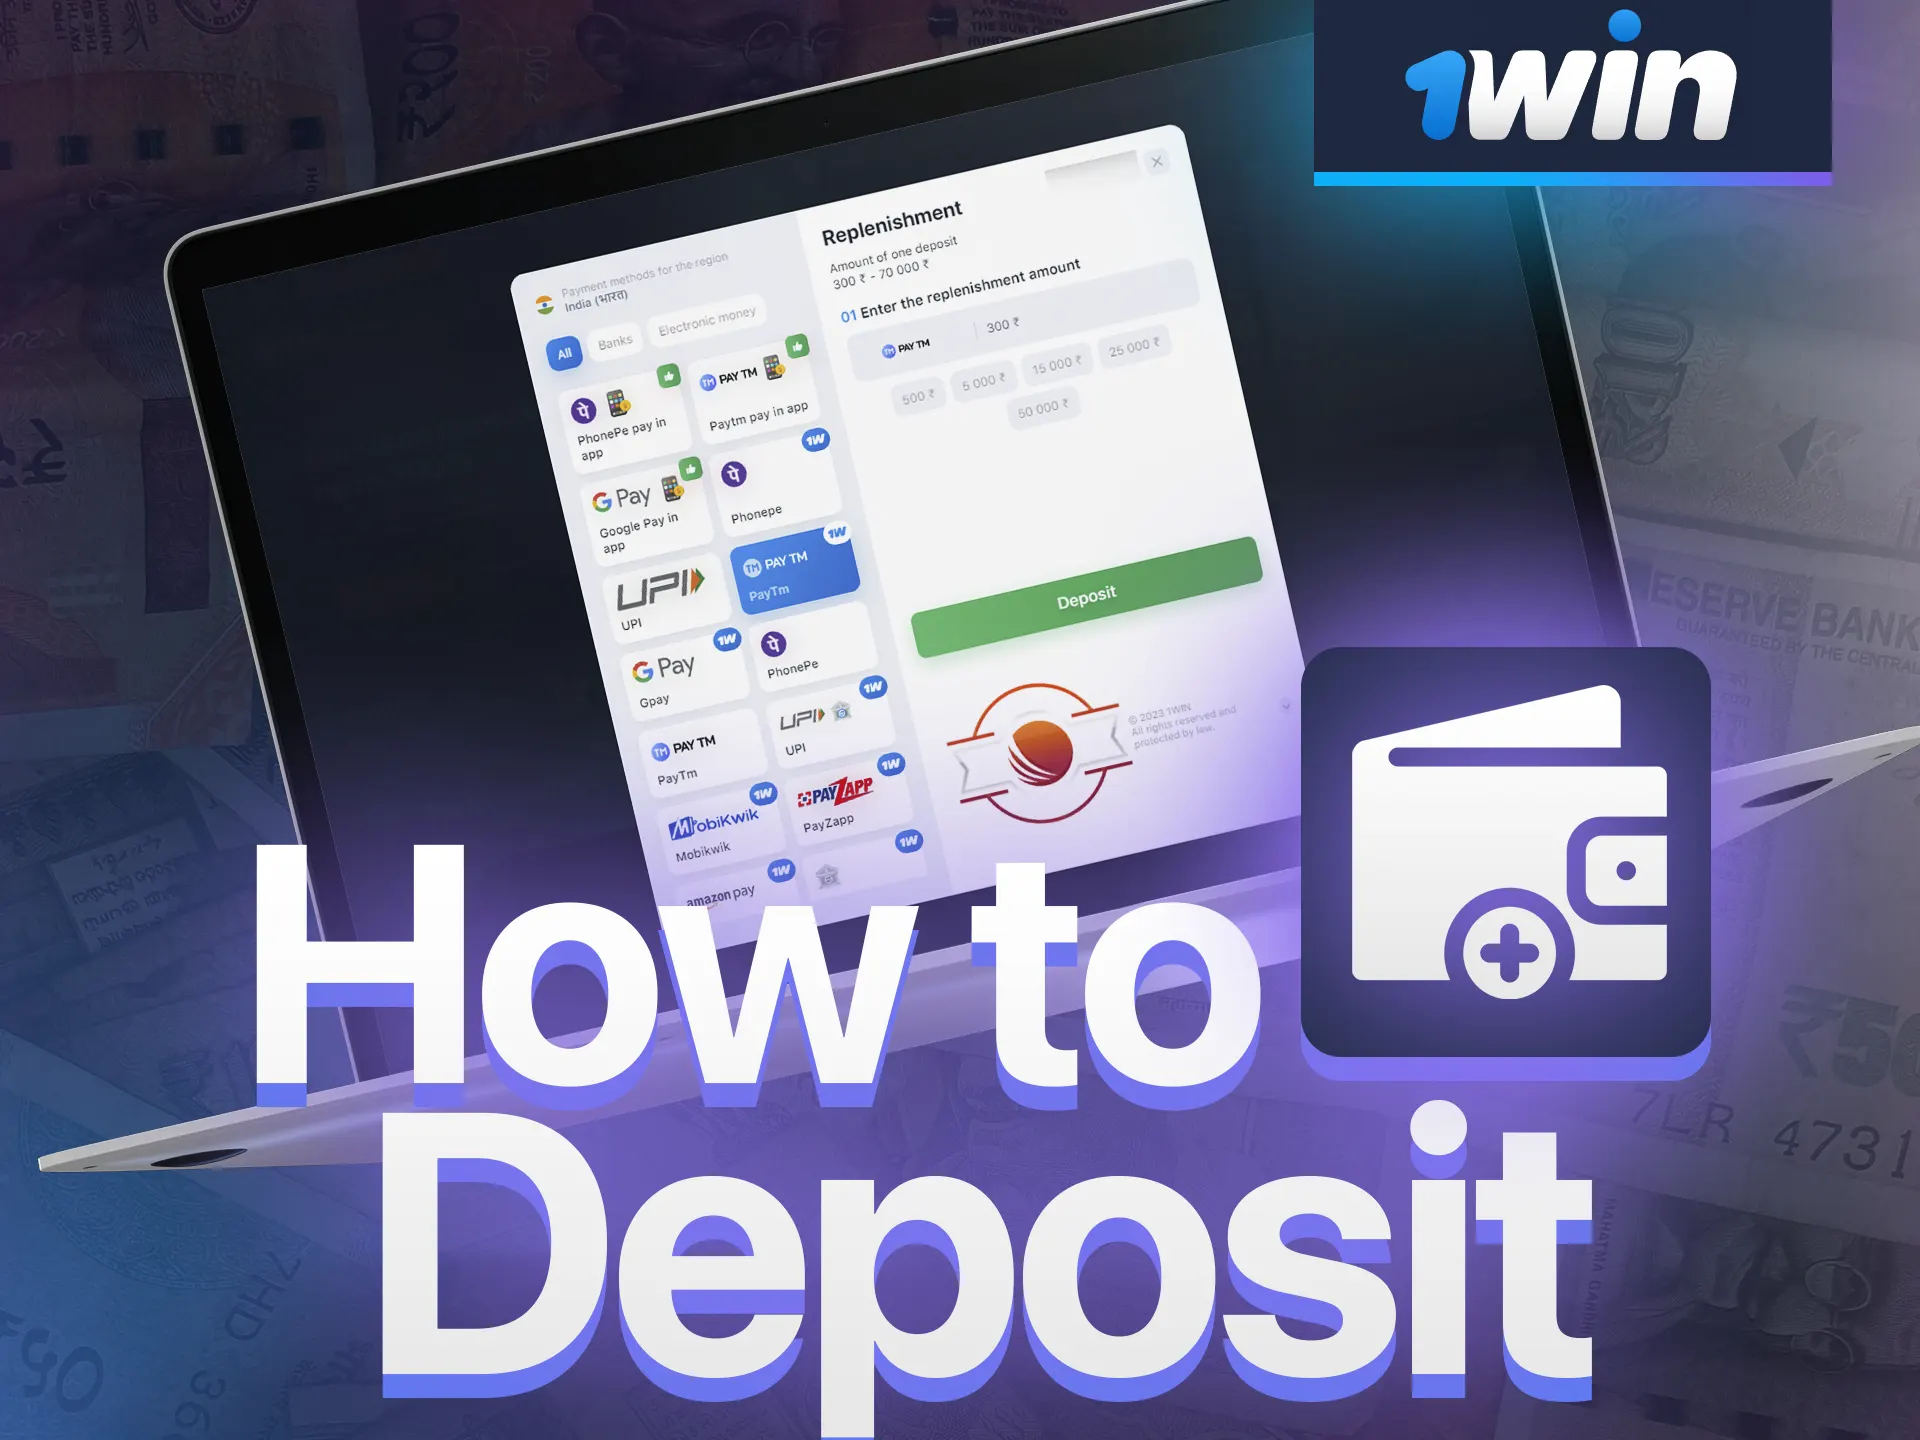 Follow the steps below to make a deposit.